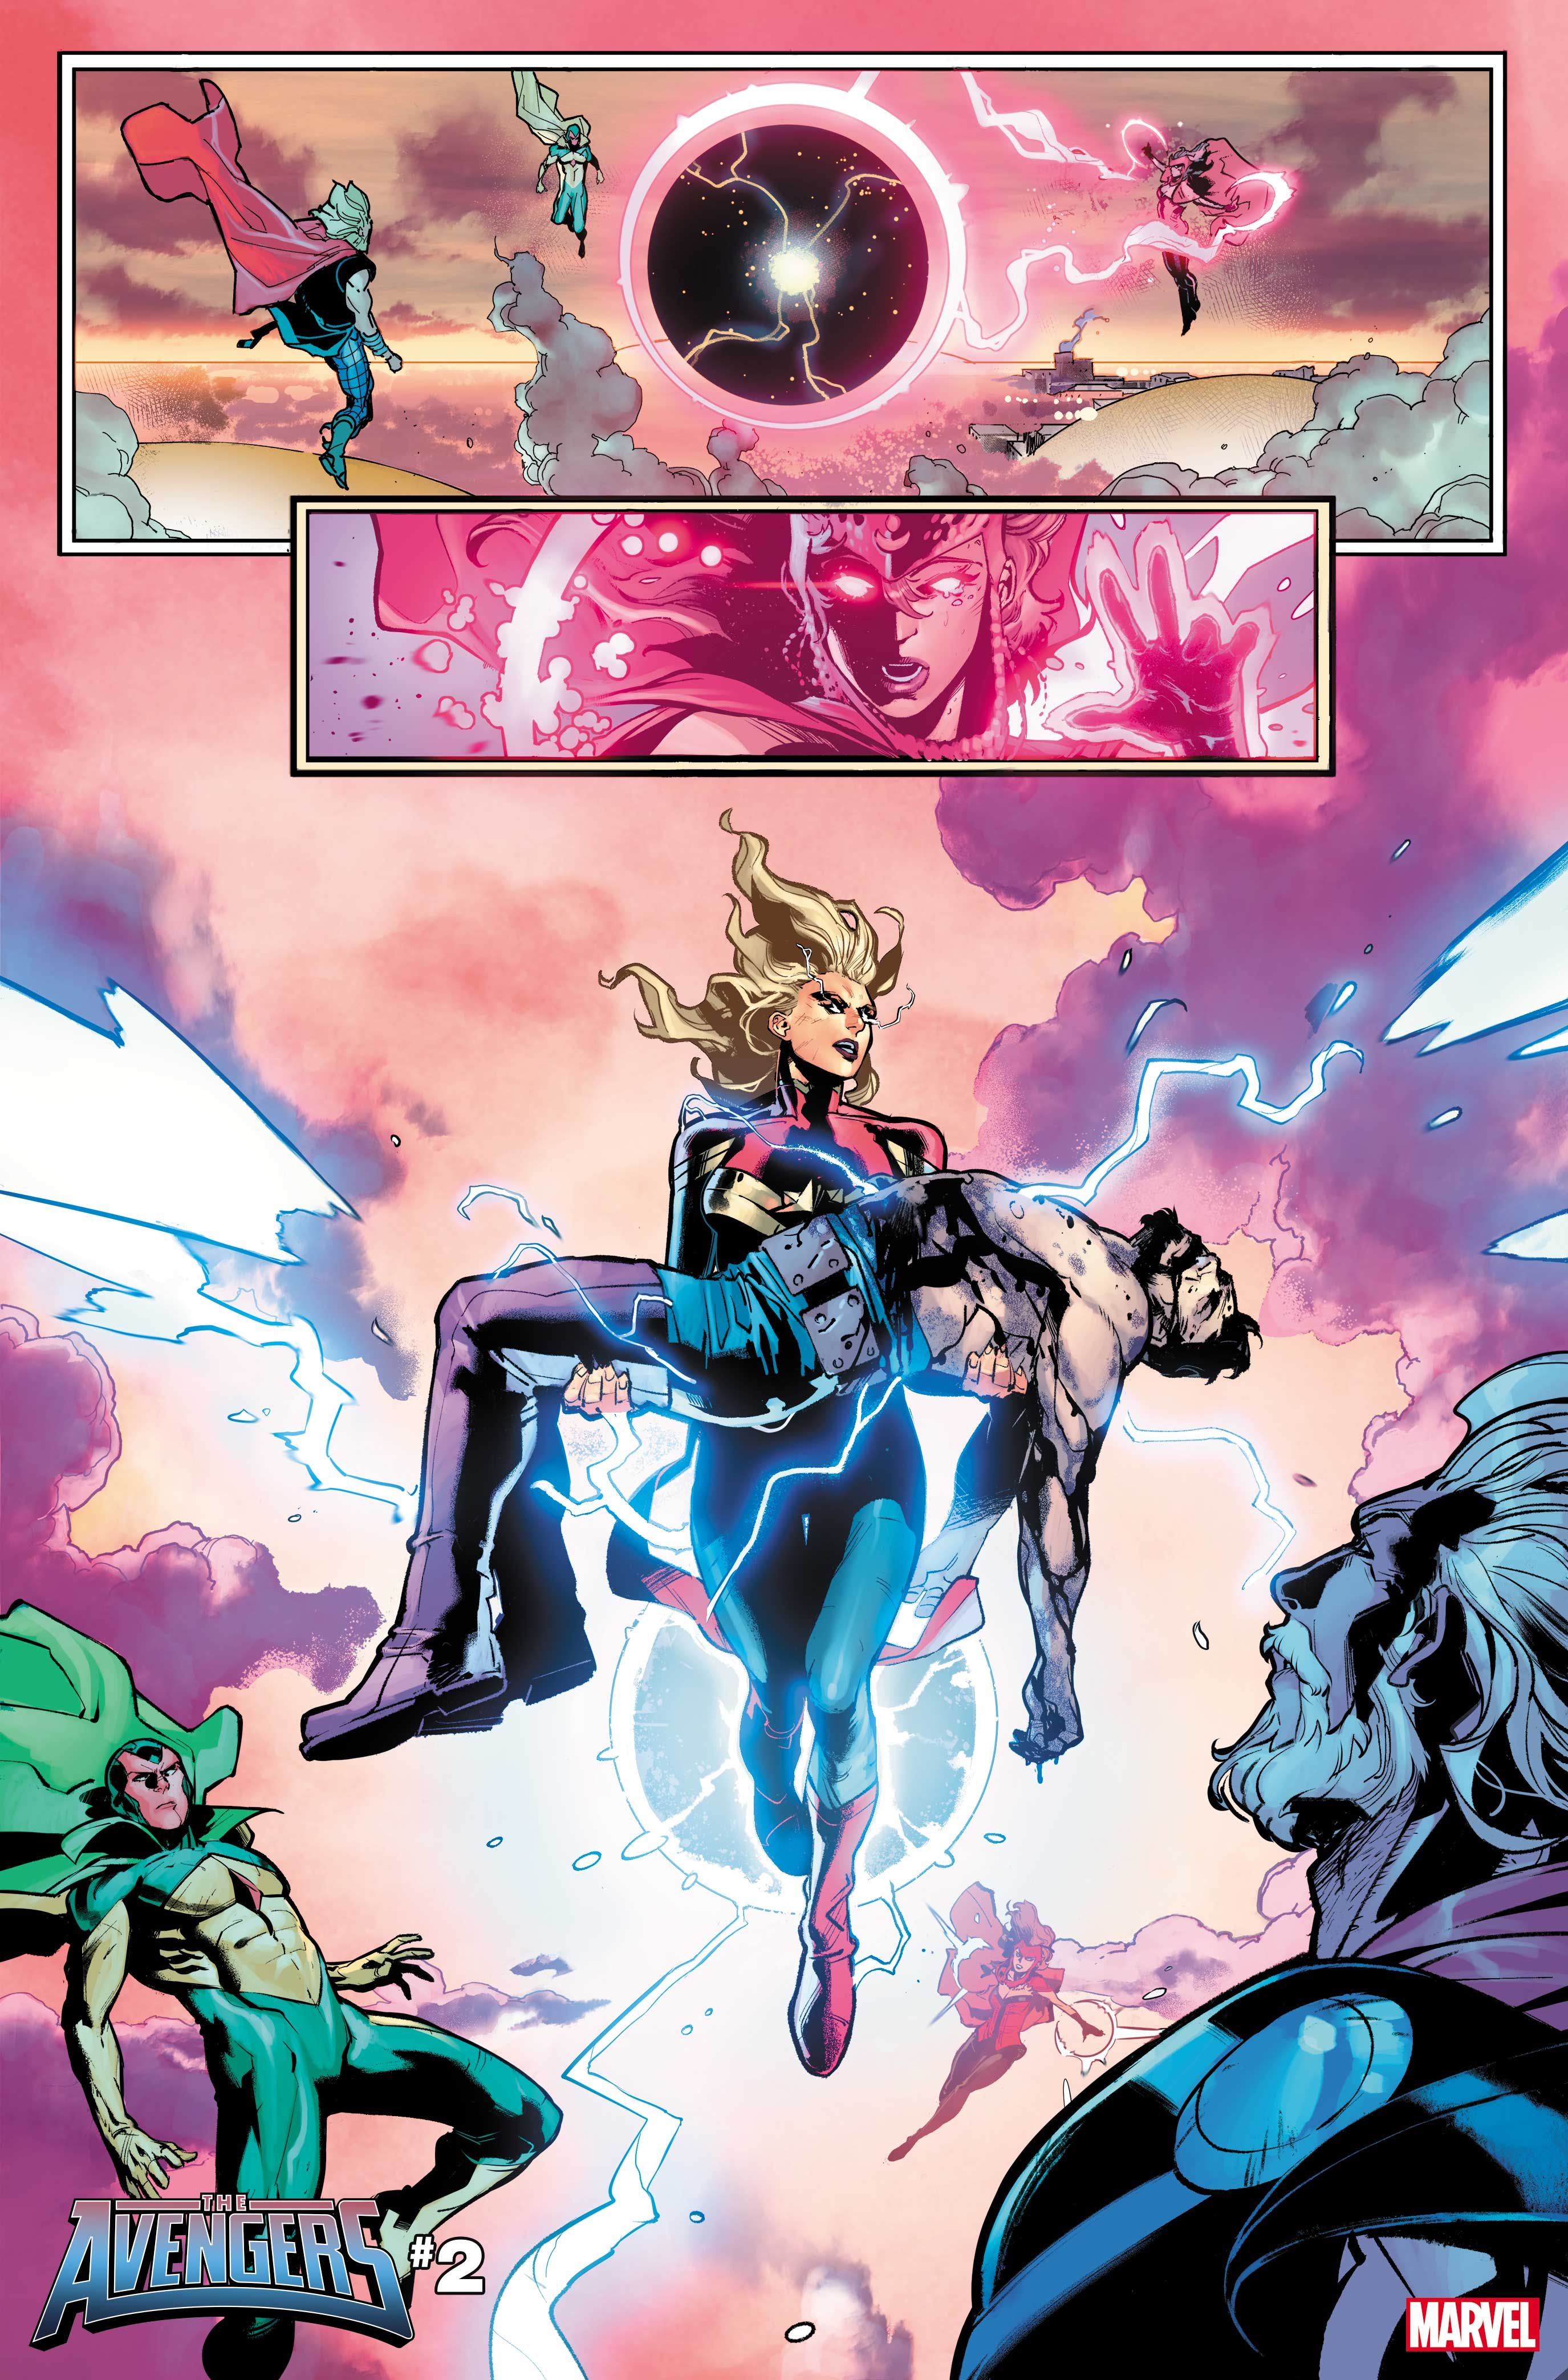 Captain Marvel flies in the air holding Tony Stark in Avengers #2